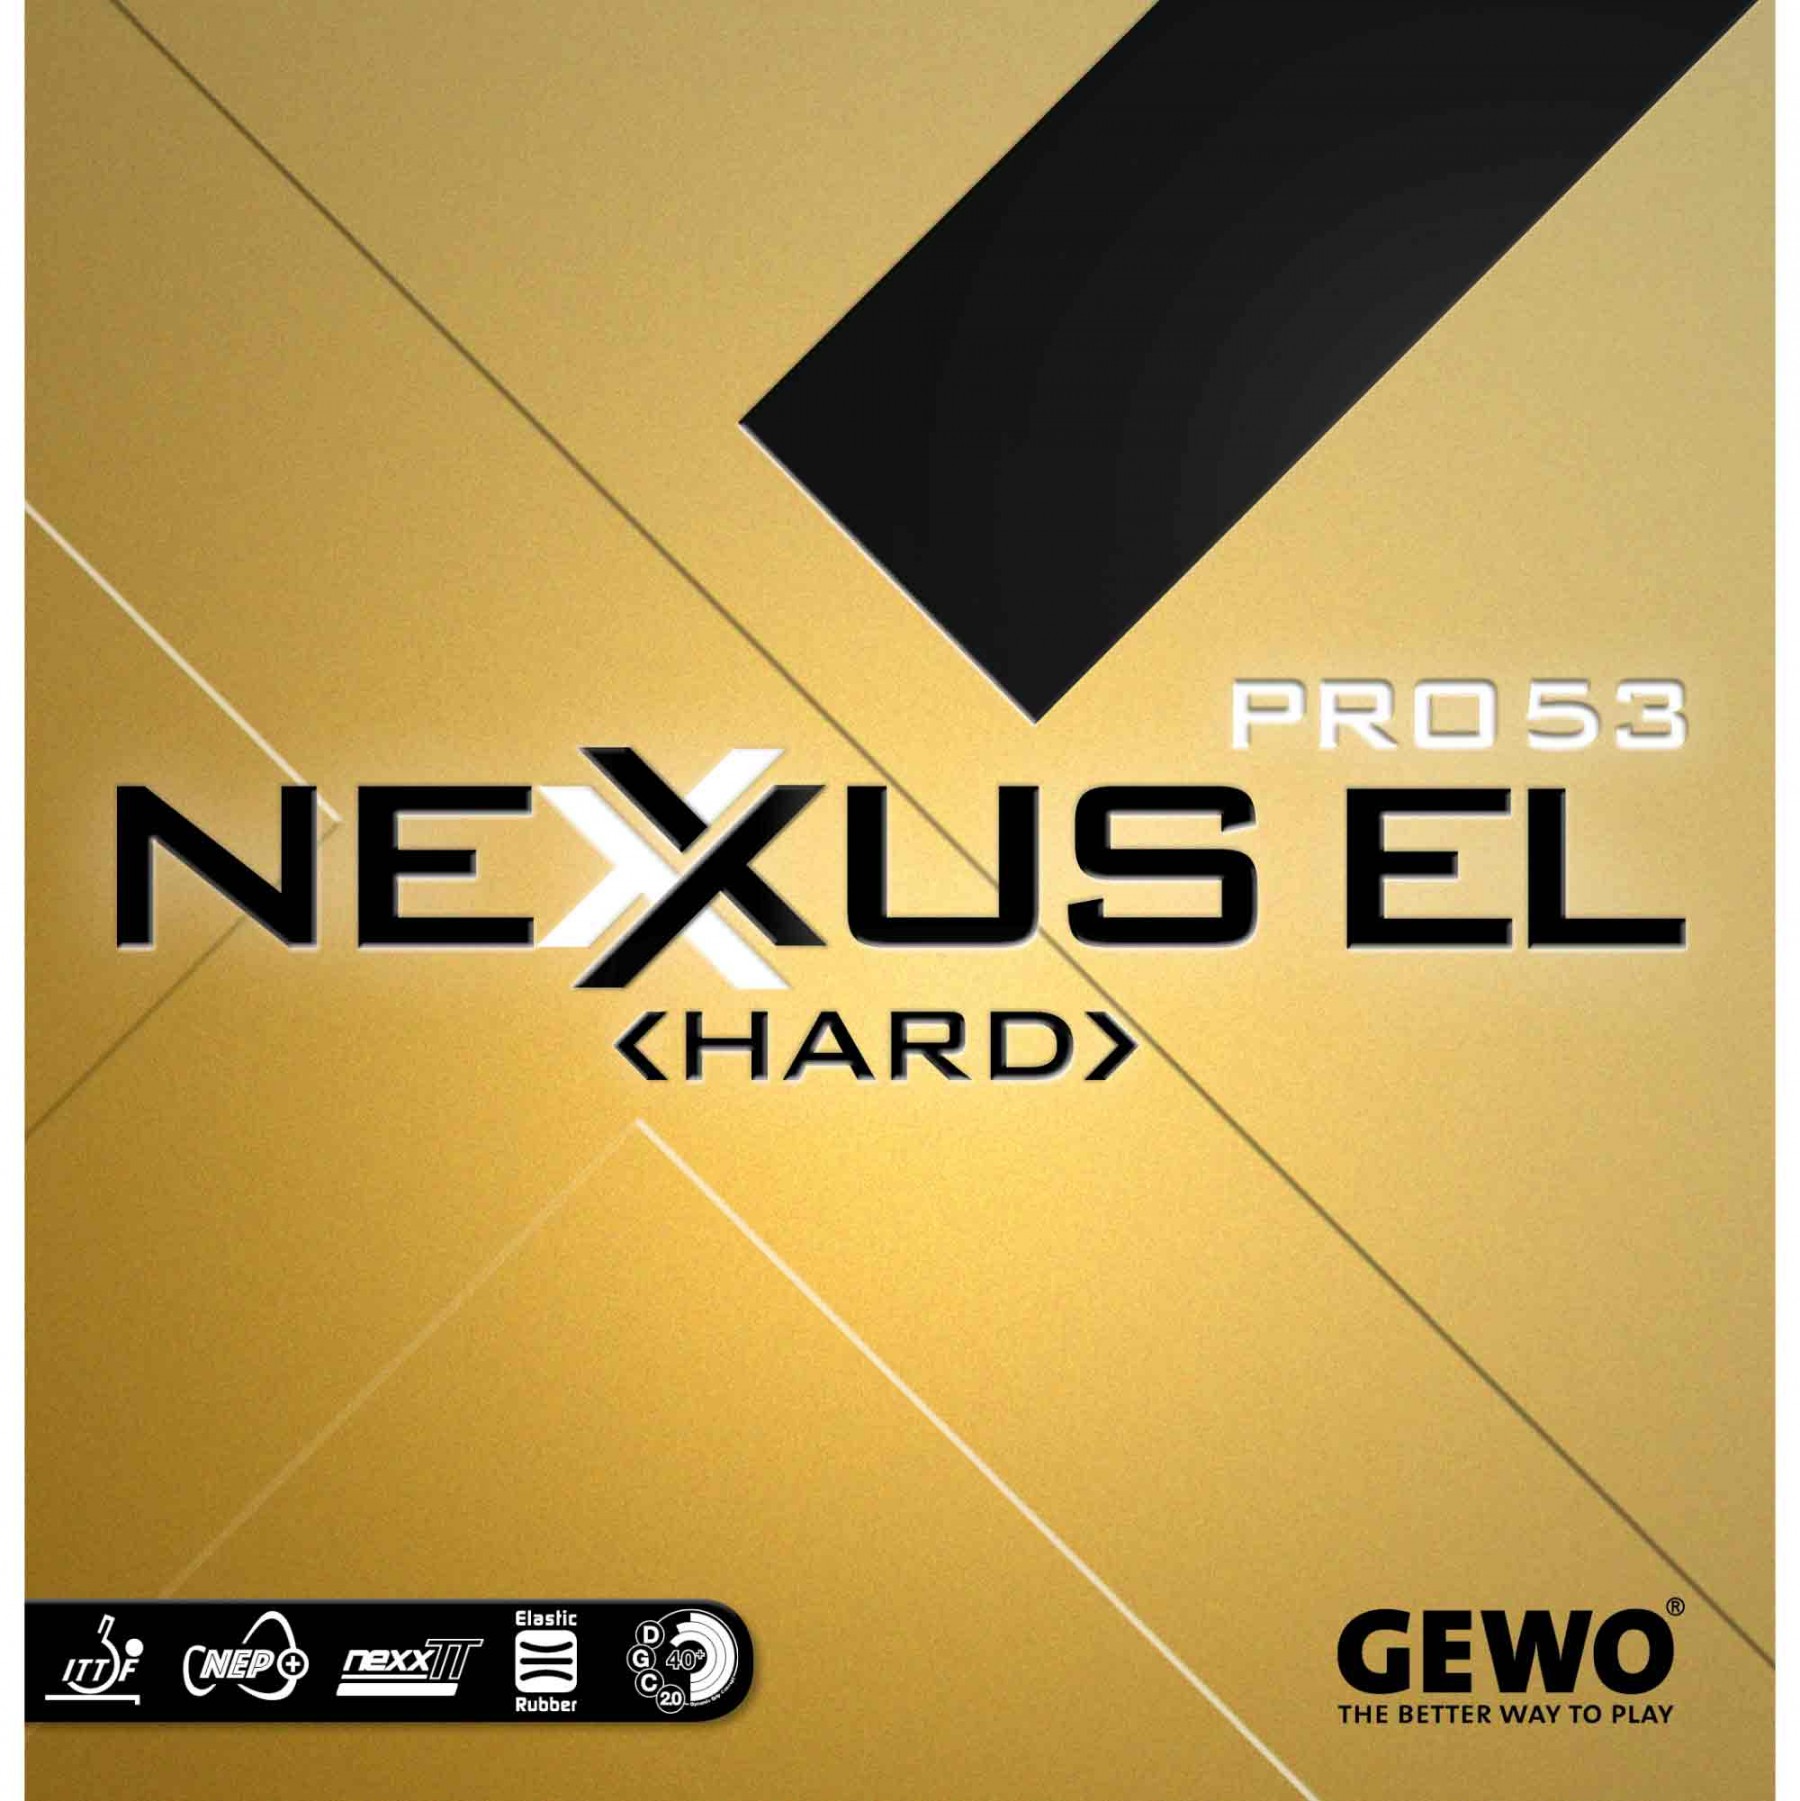 Explosives Reverse Medic Gewo Nexxus EL Pro 53 Hard Table Tennis Rubber